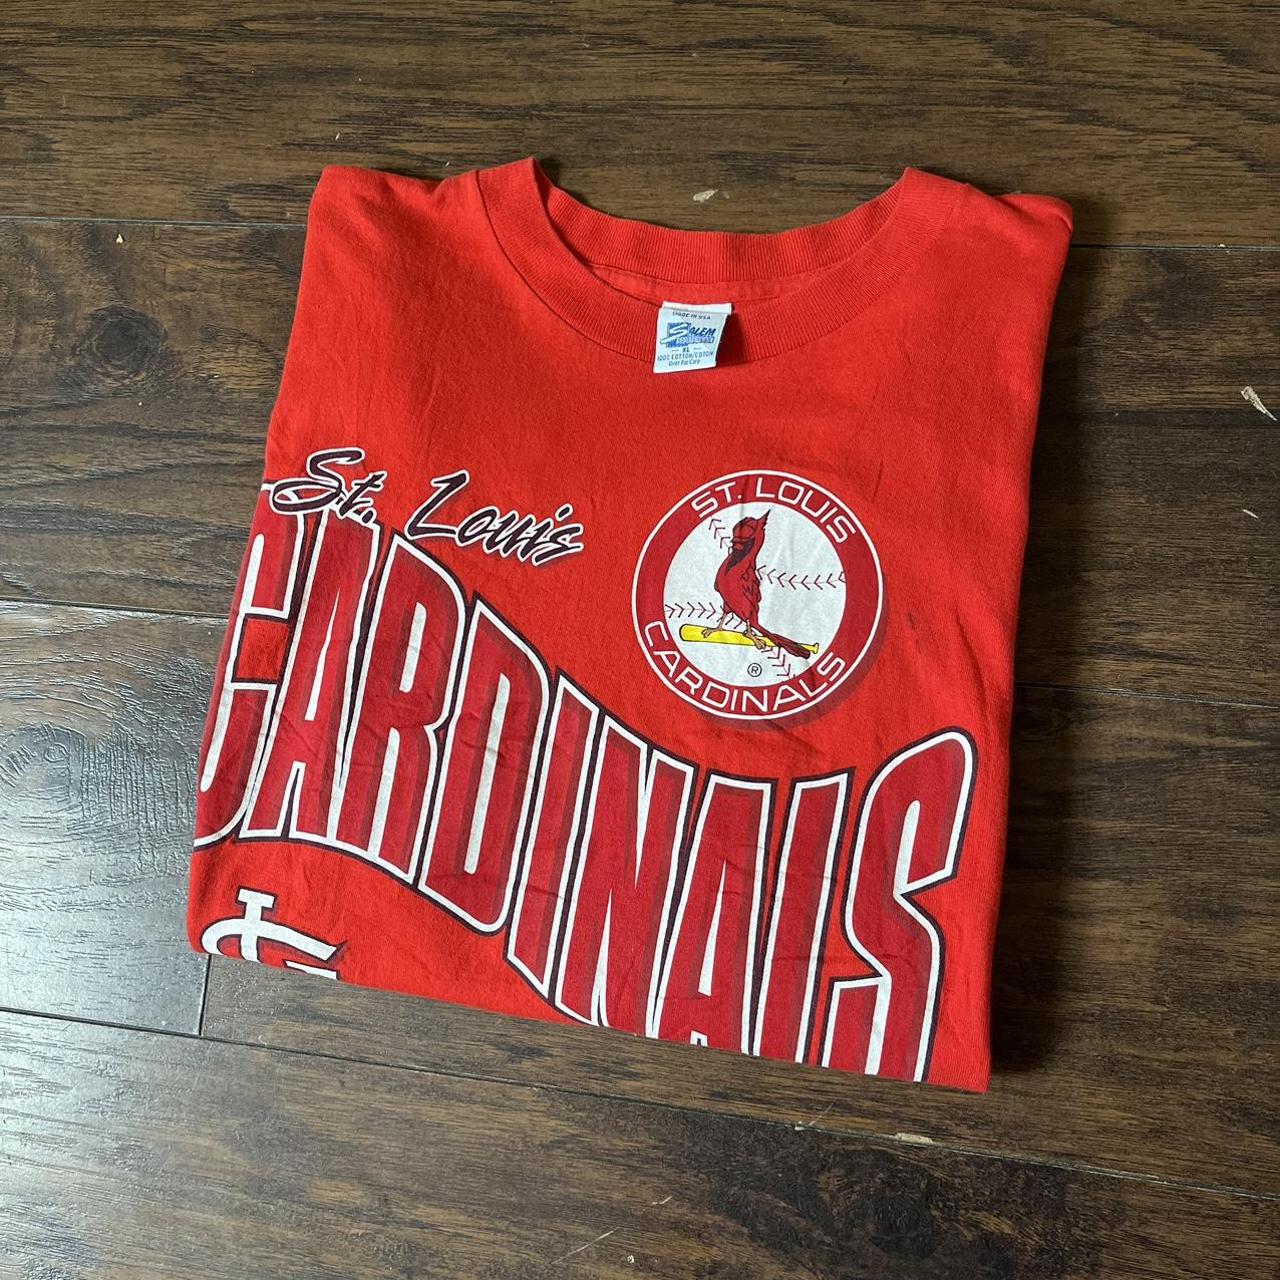 1994 St. Louis Cardinals Graphic T-Shirt Size Medium, Salem Sportswear